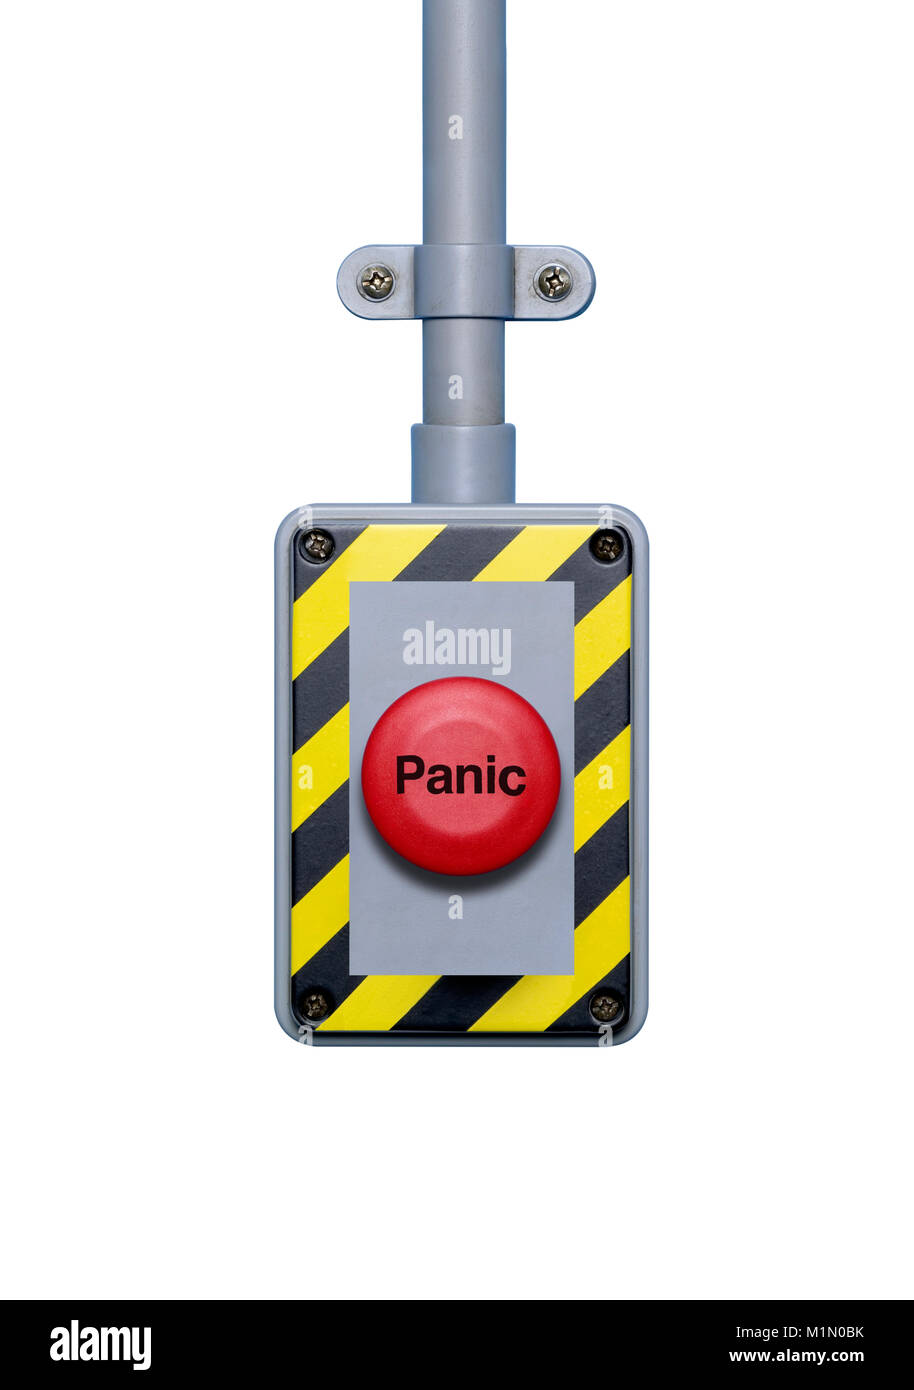 police panic button